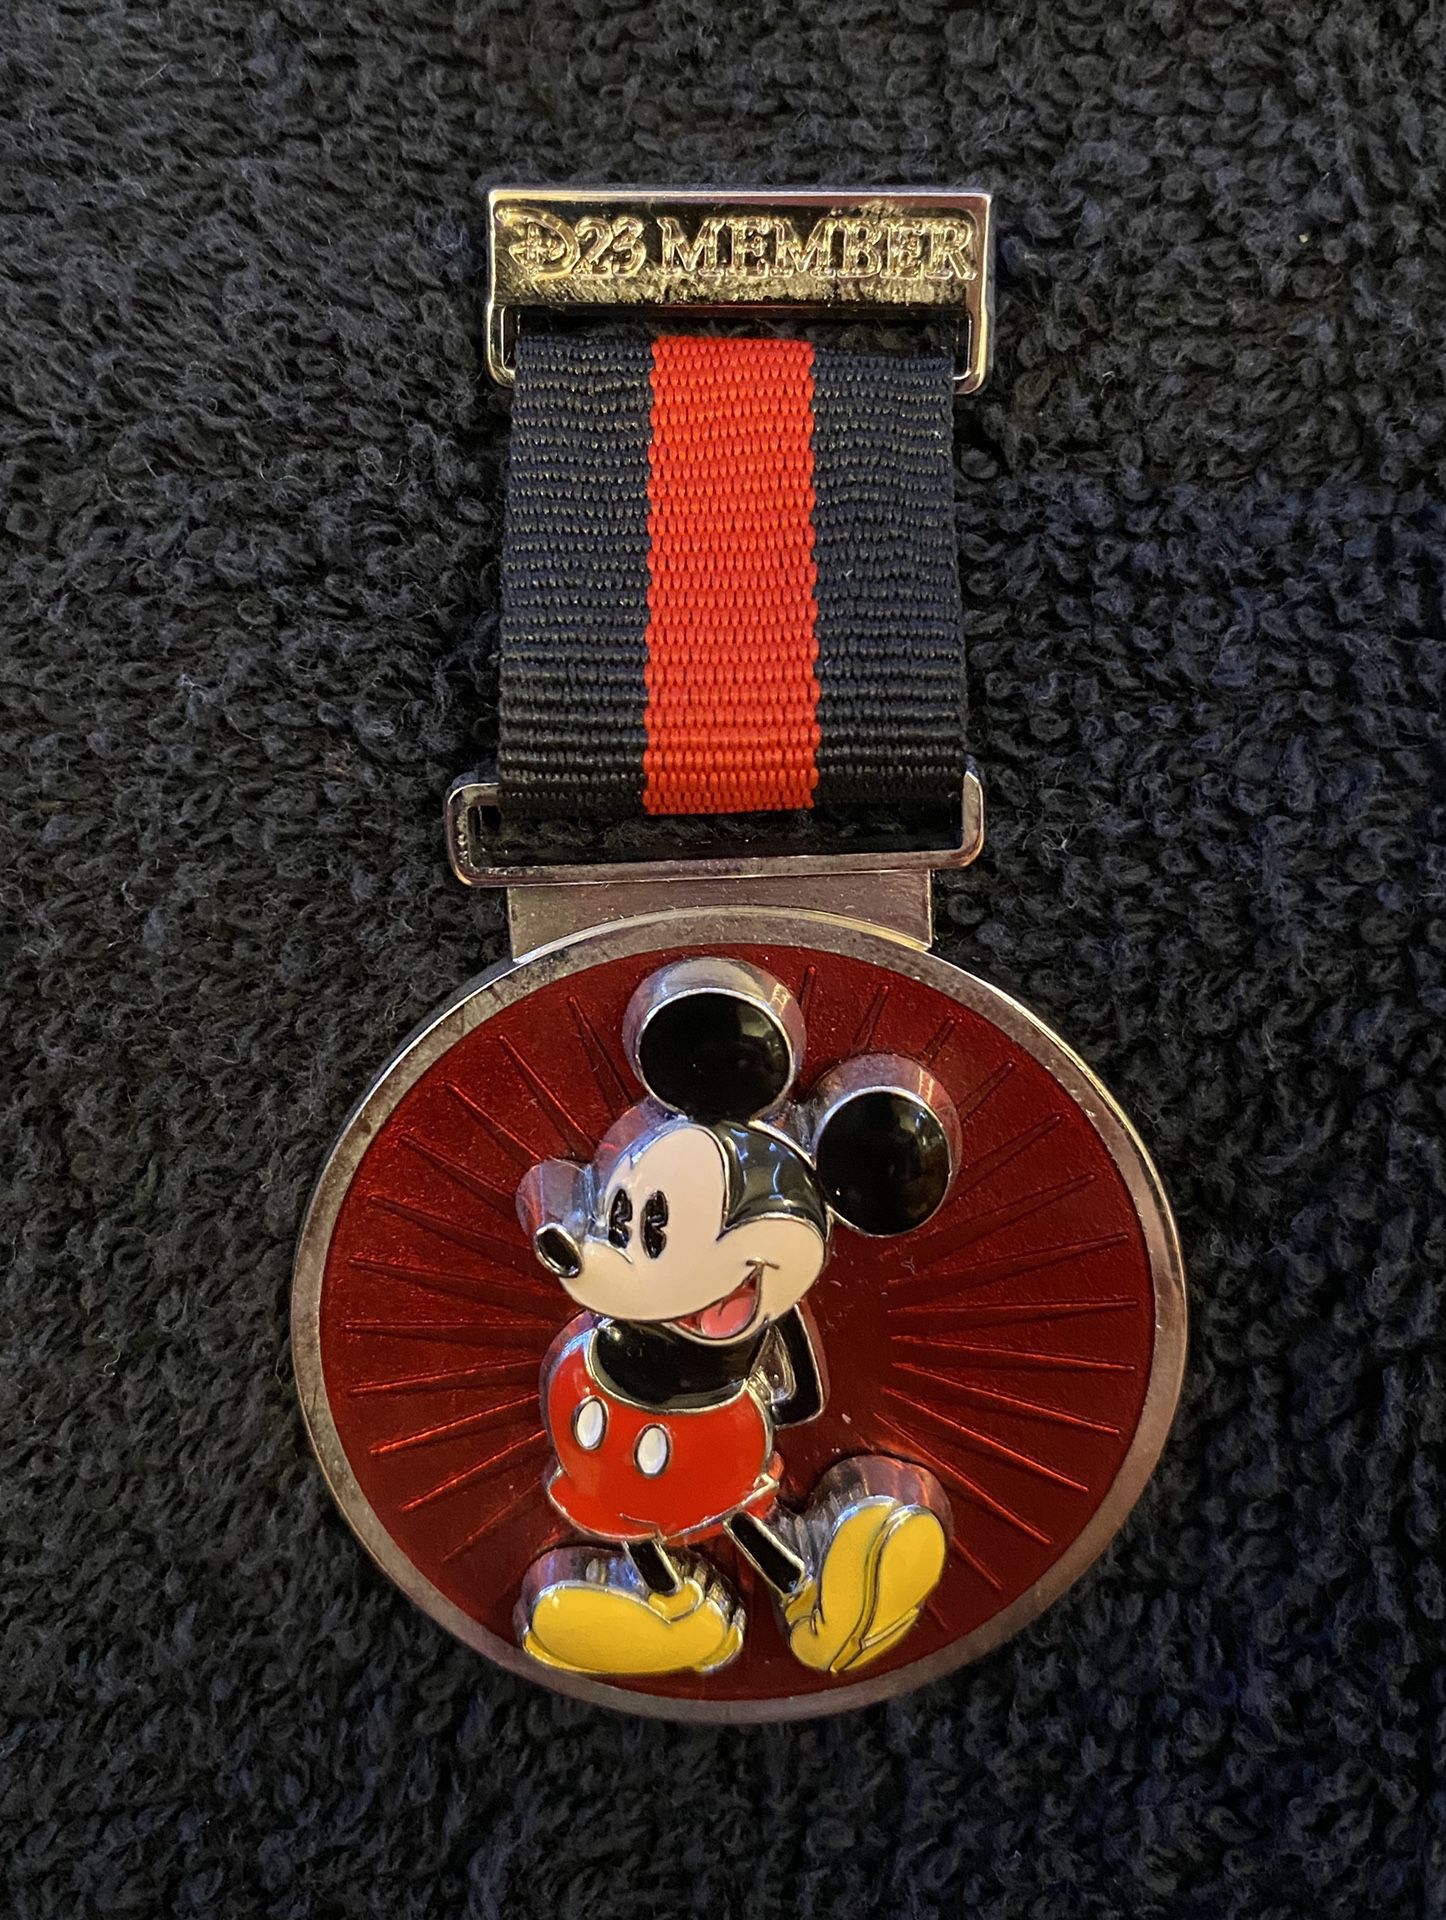 Disney Pin #184, 2016, D23 Member Collection